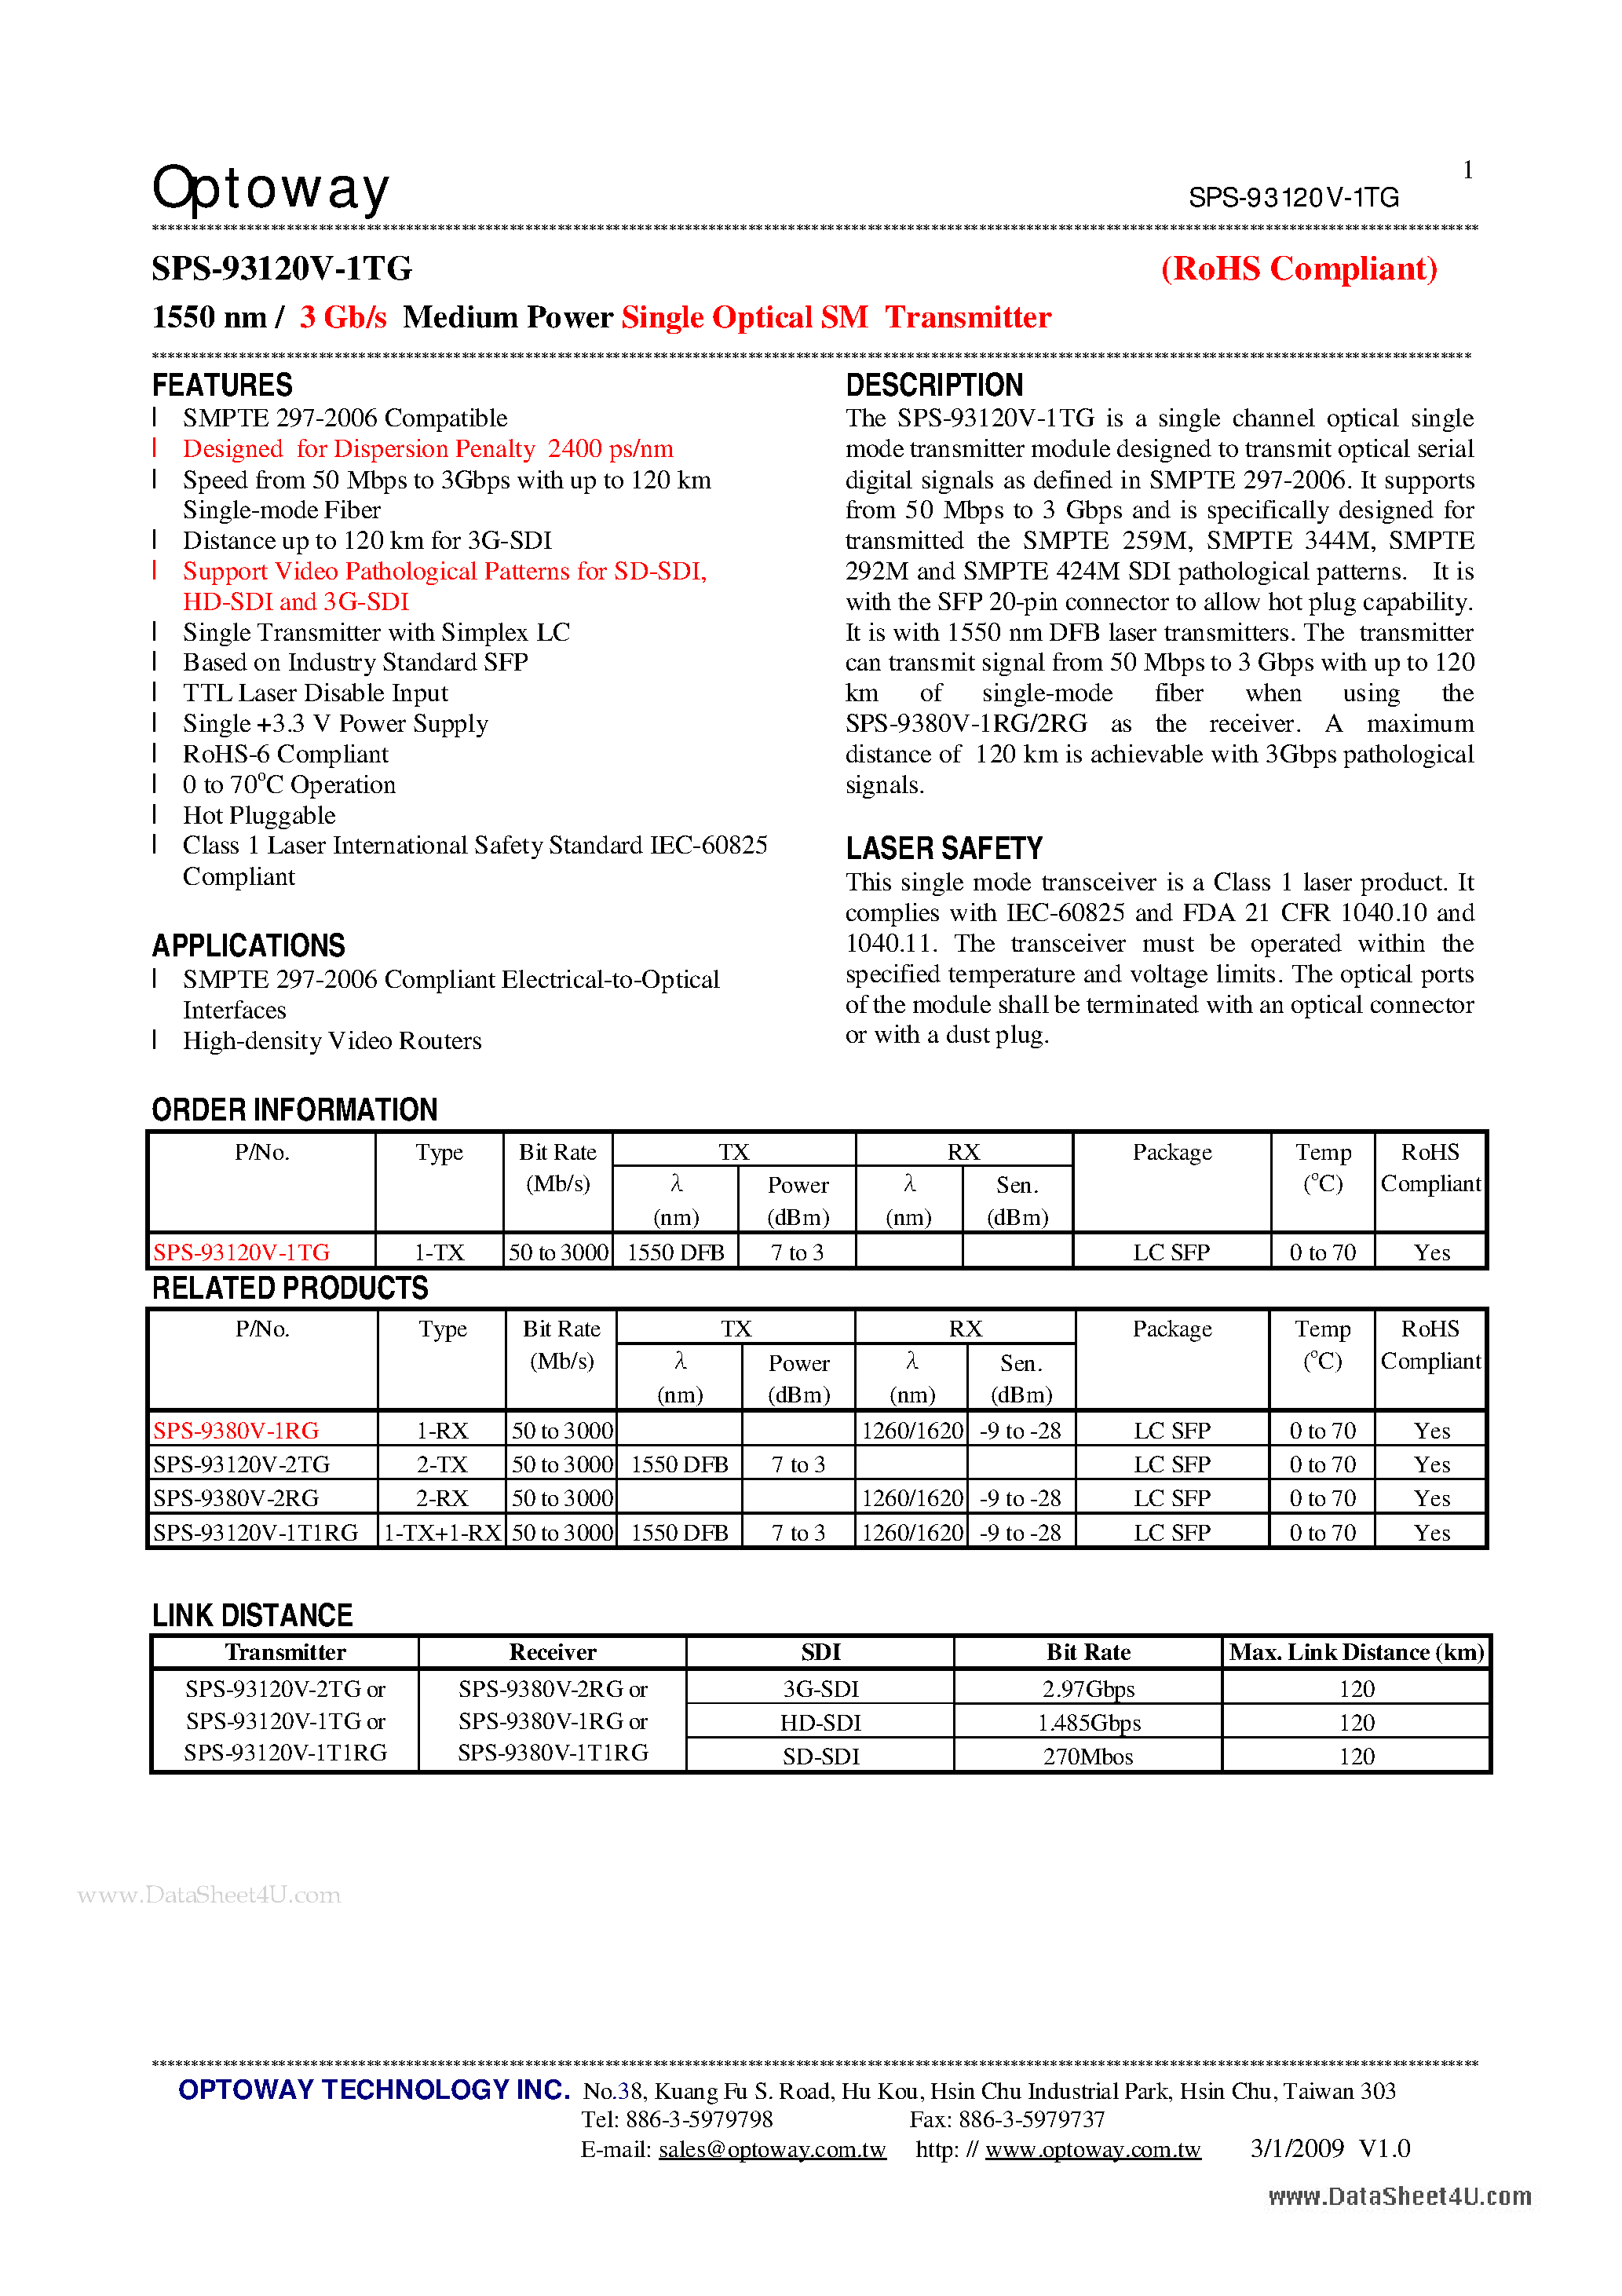 Datasheet SPS-93120V-1TG - 1550 nm / 3 Gb/s Medium Power Single Optical SM Transmitter page 1